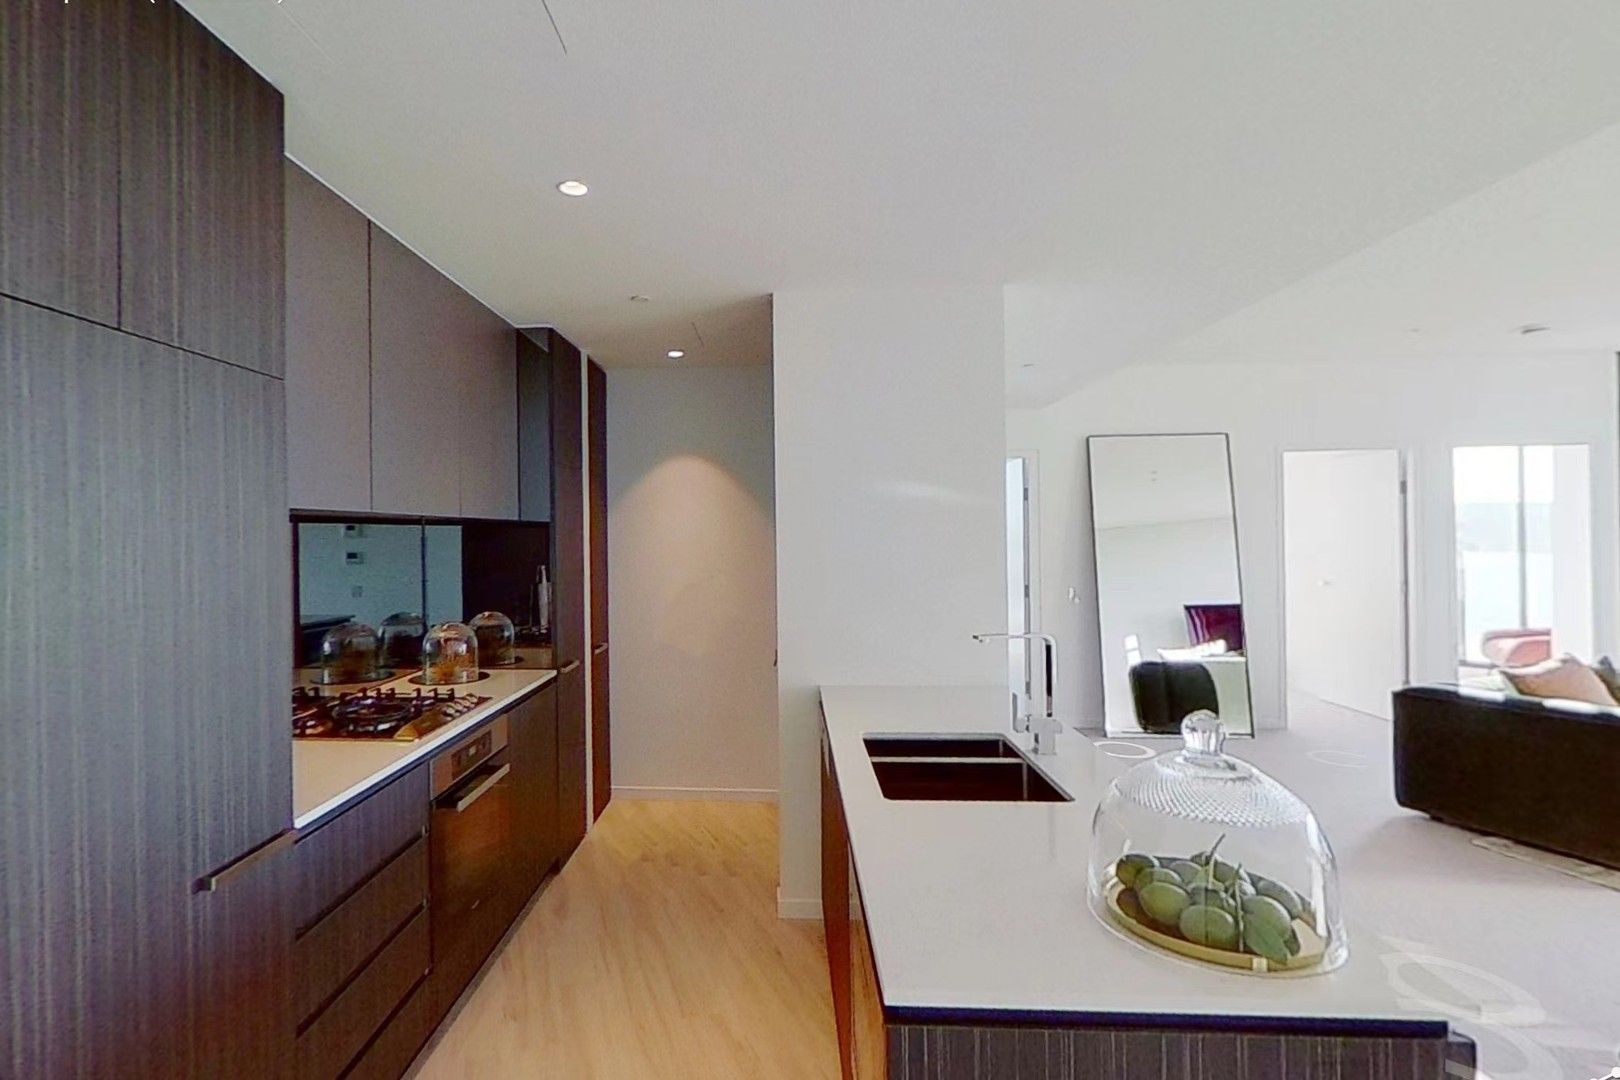 2 bedrooms Apartment / Unit / Flat in 3XXX/301 BOTANY ROAD ZETLAND NSW, 2017